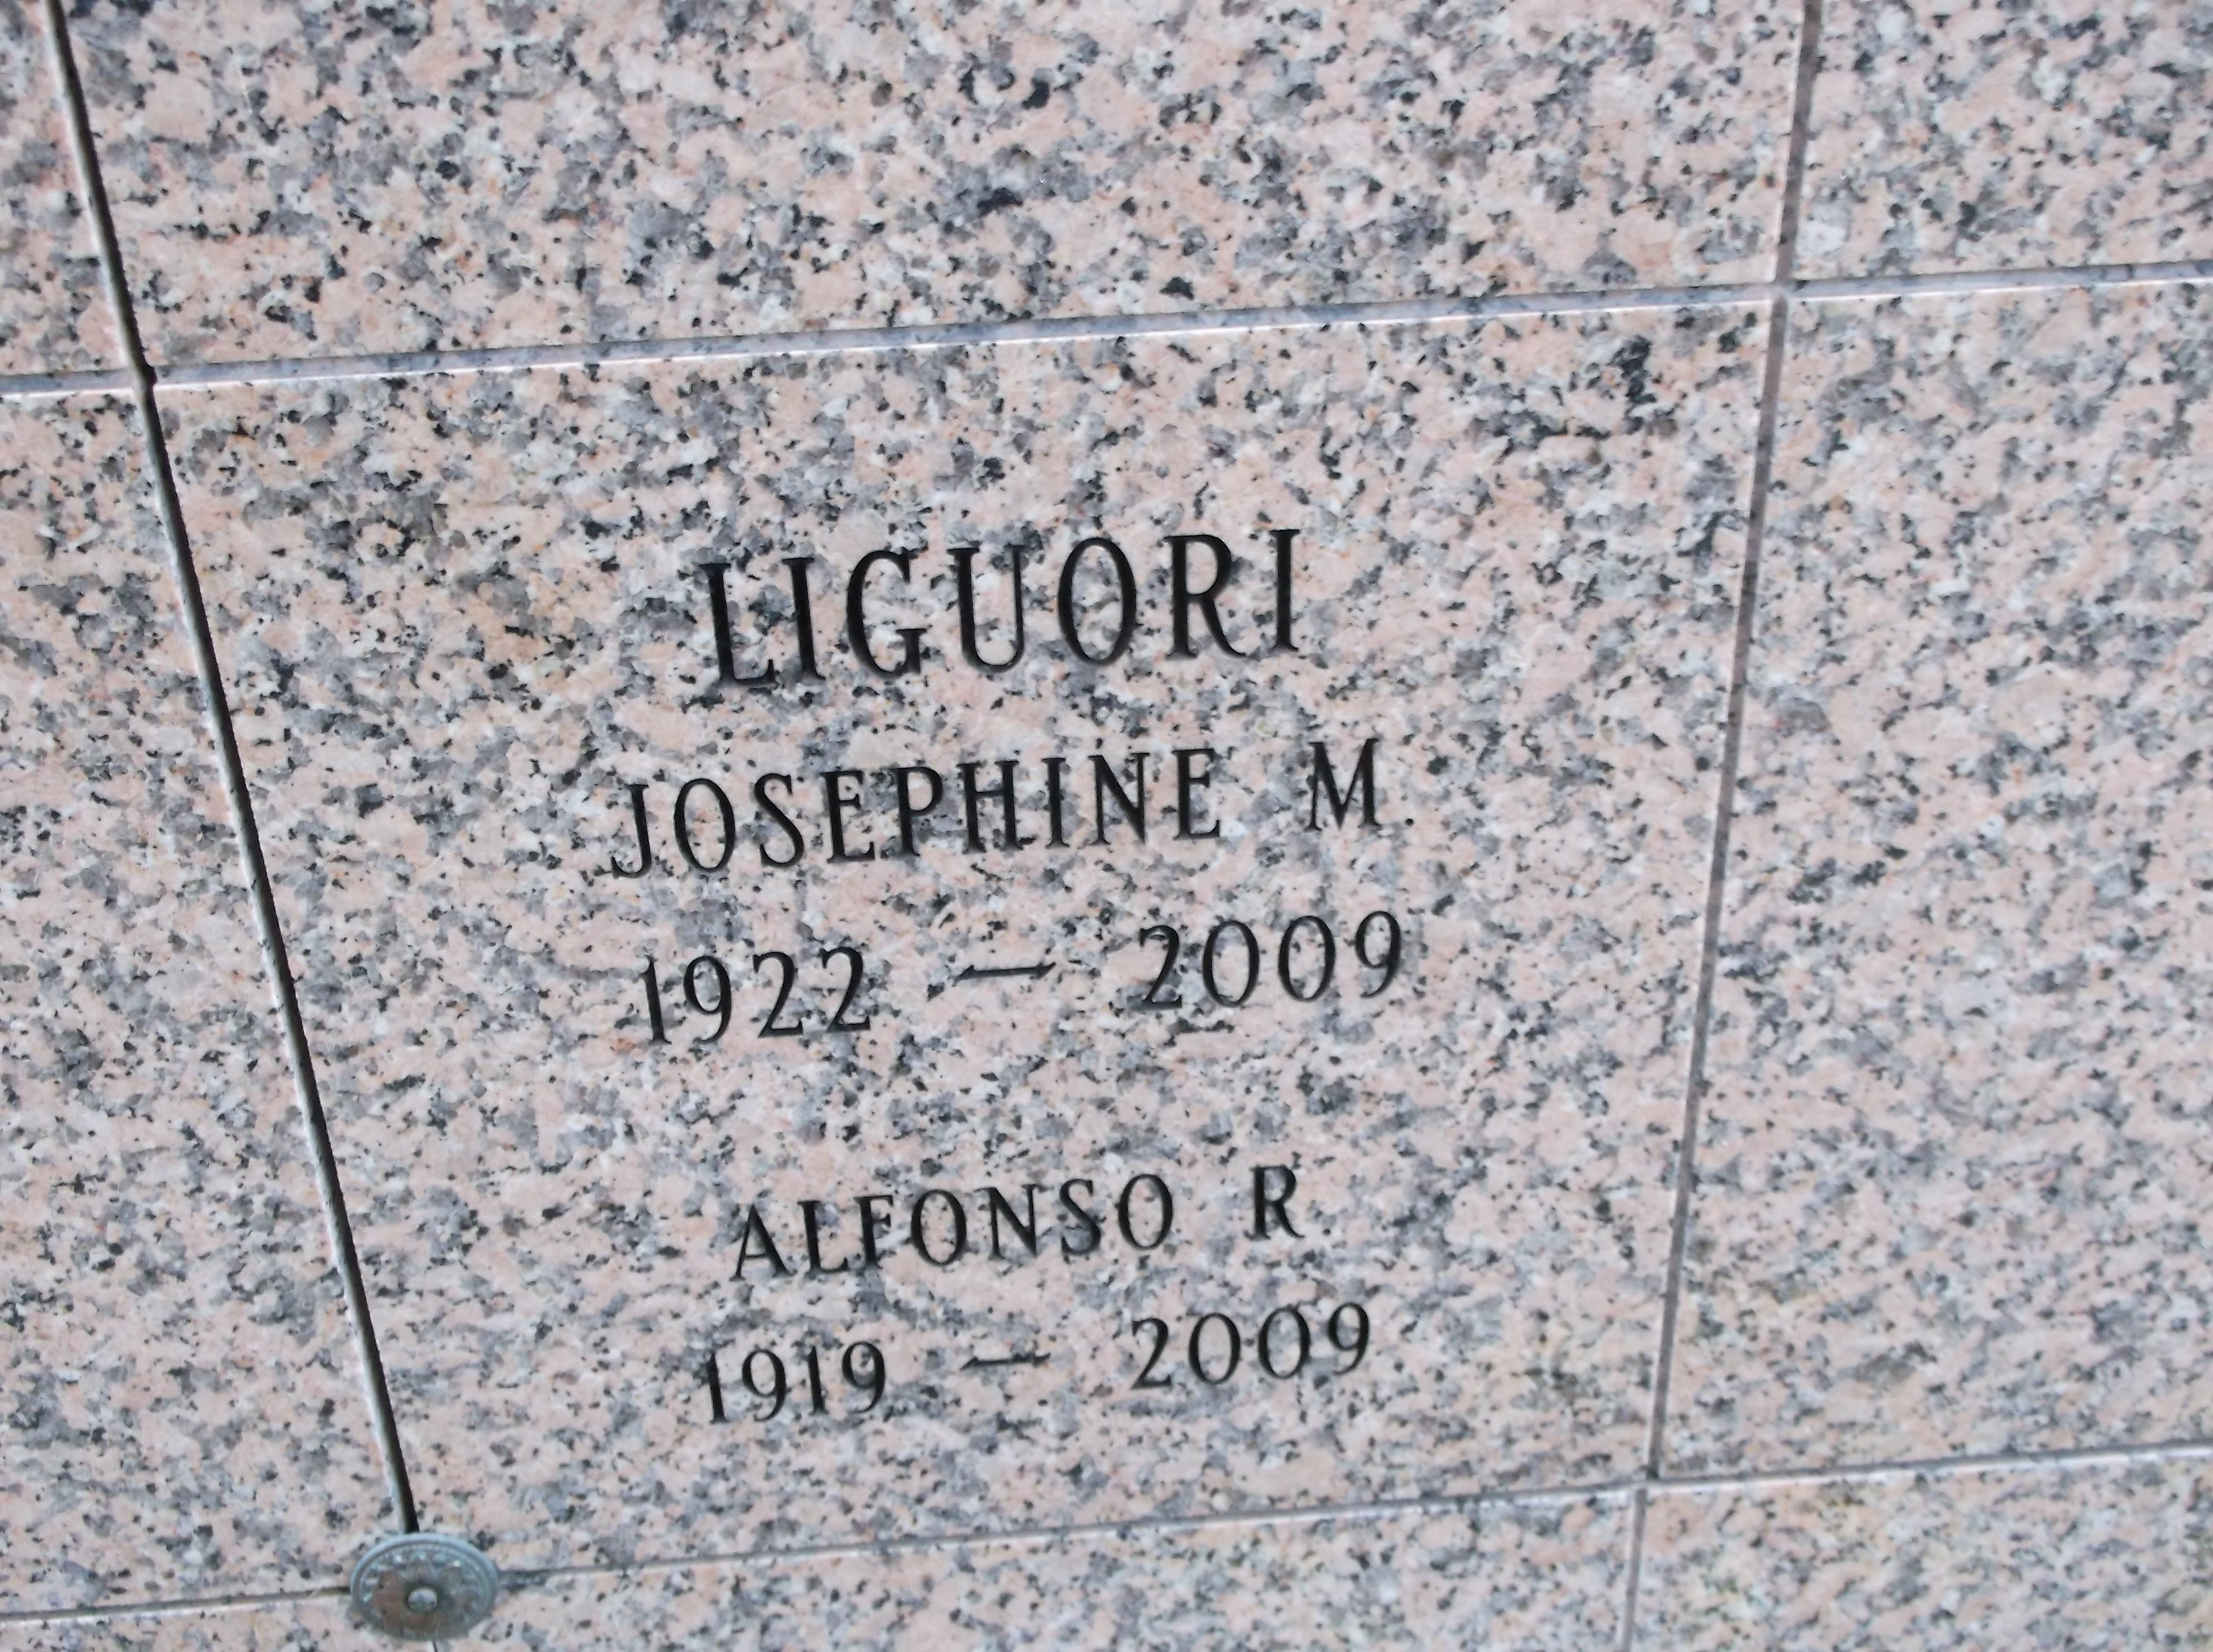 Josephine M Liguori